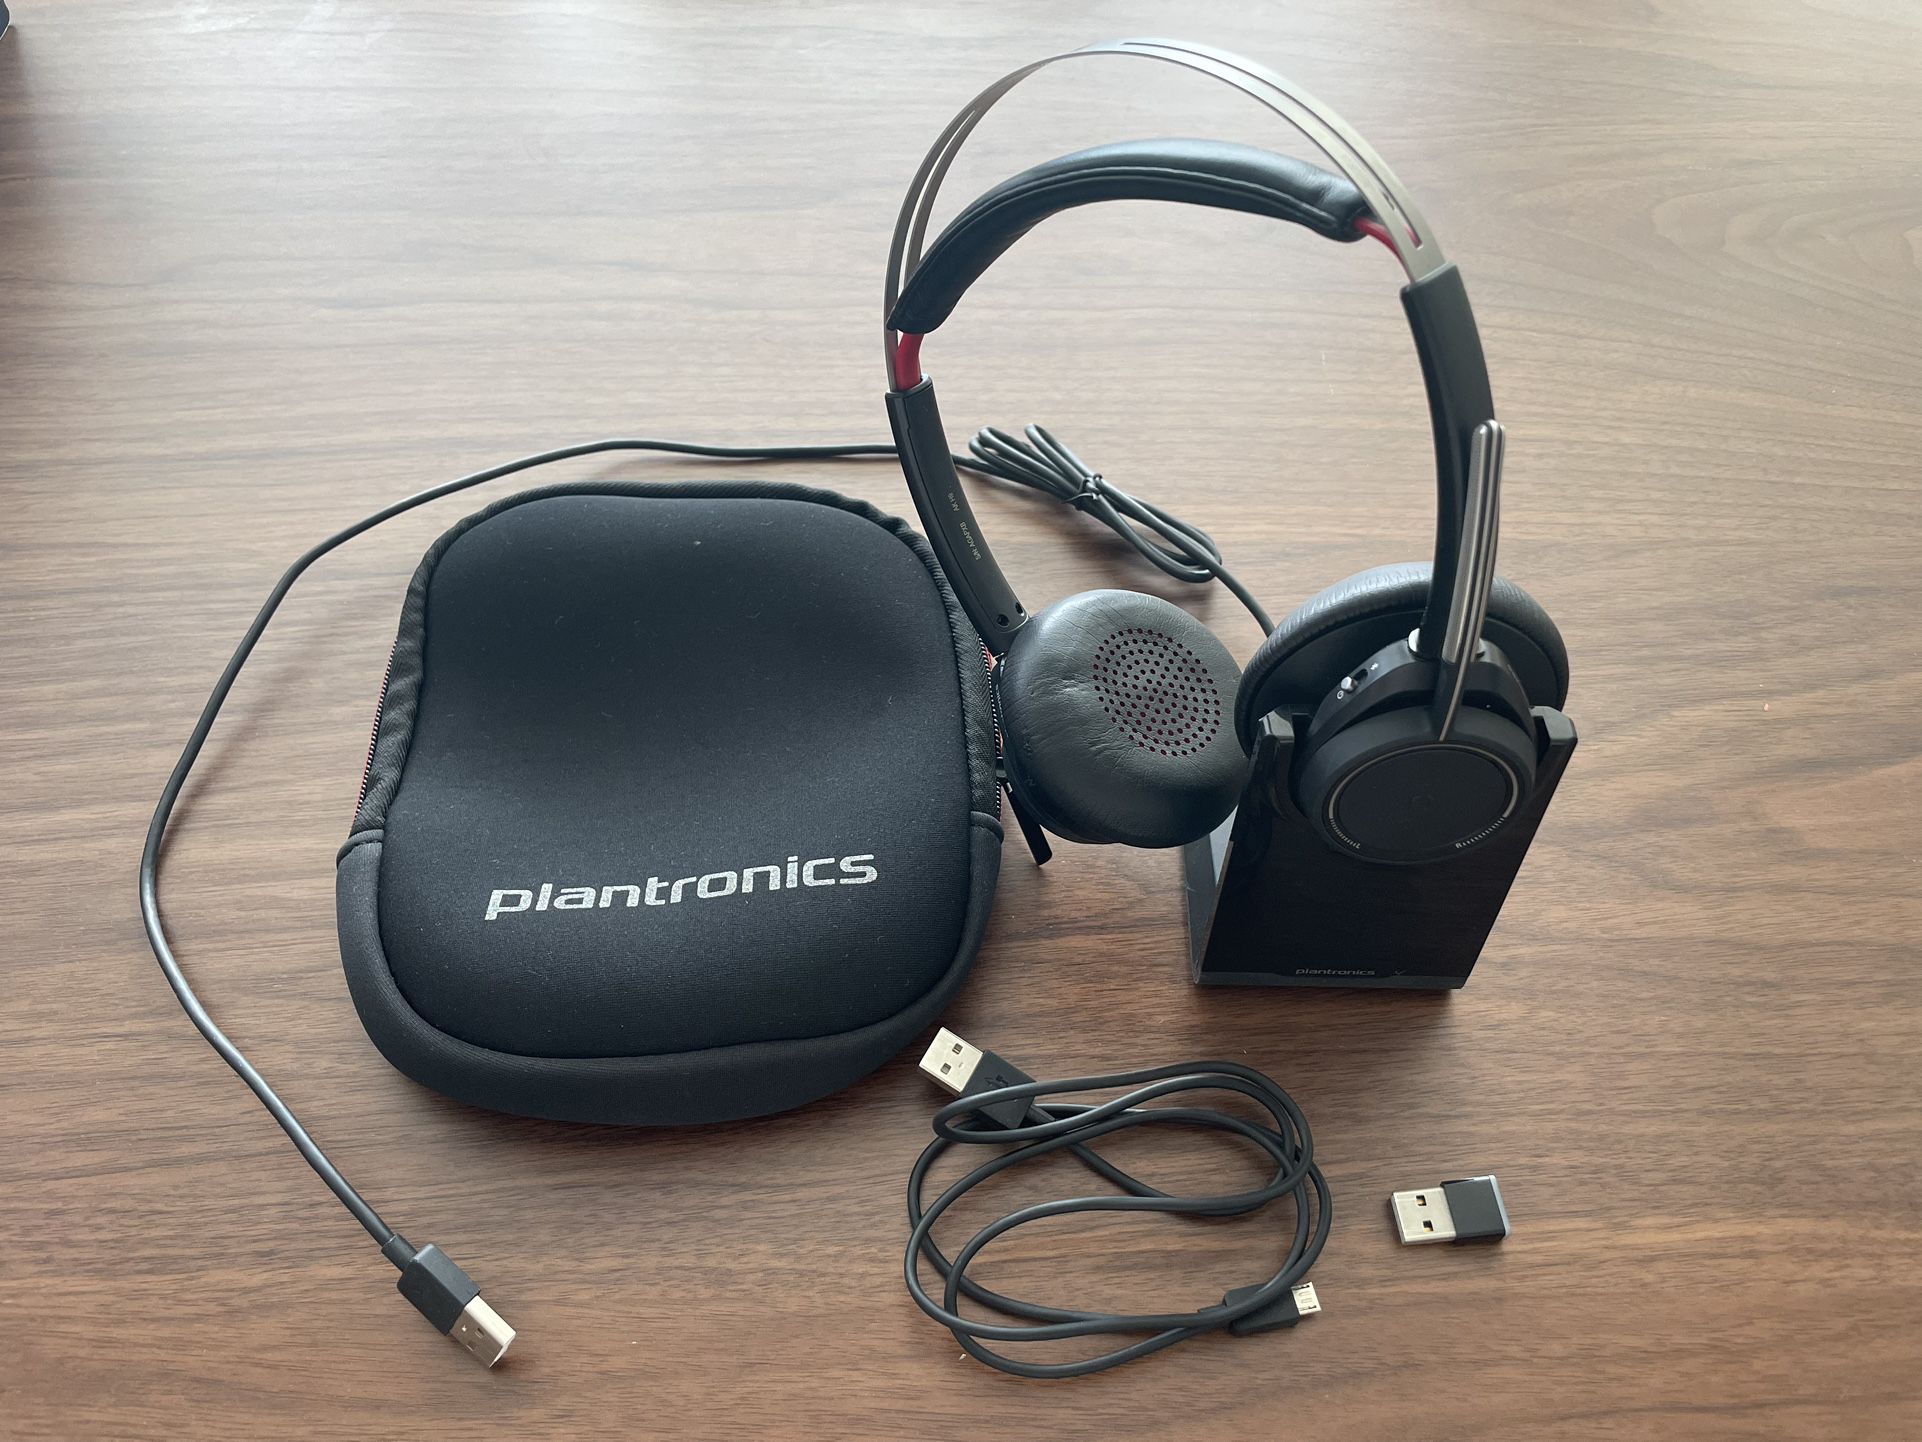 Plantronics Wireless headset